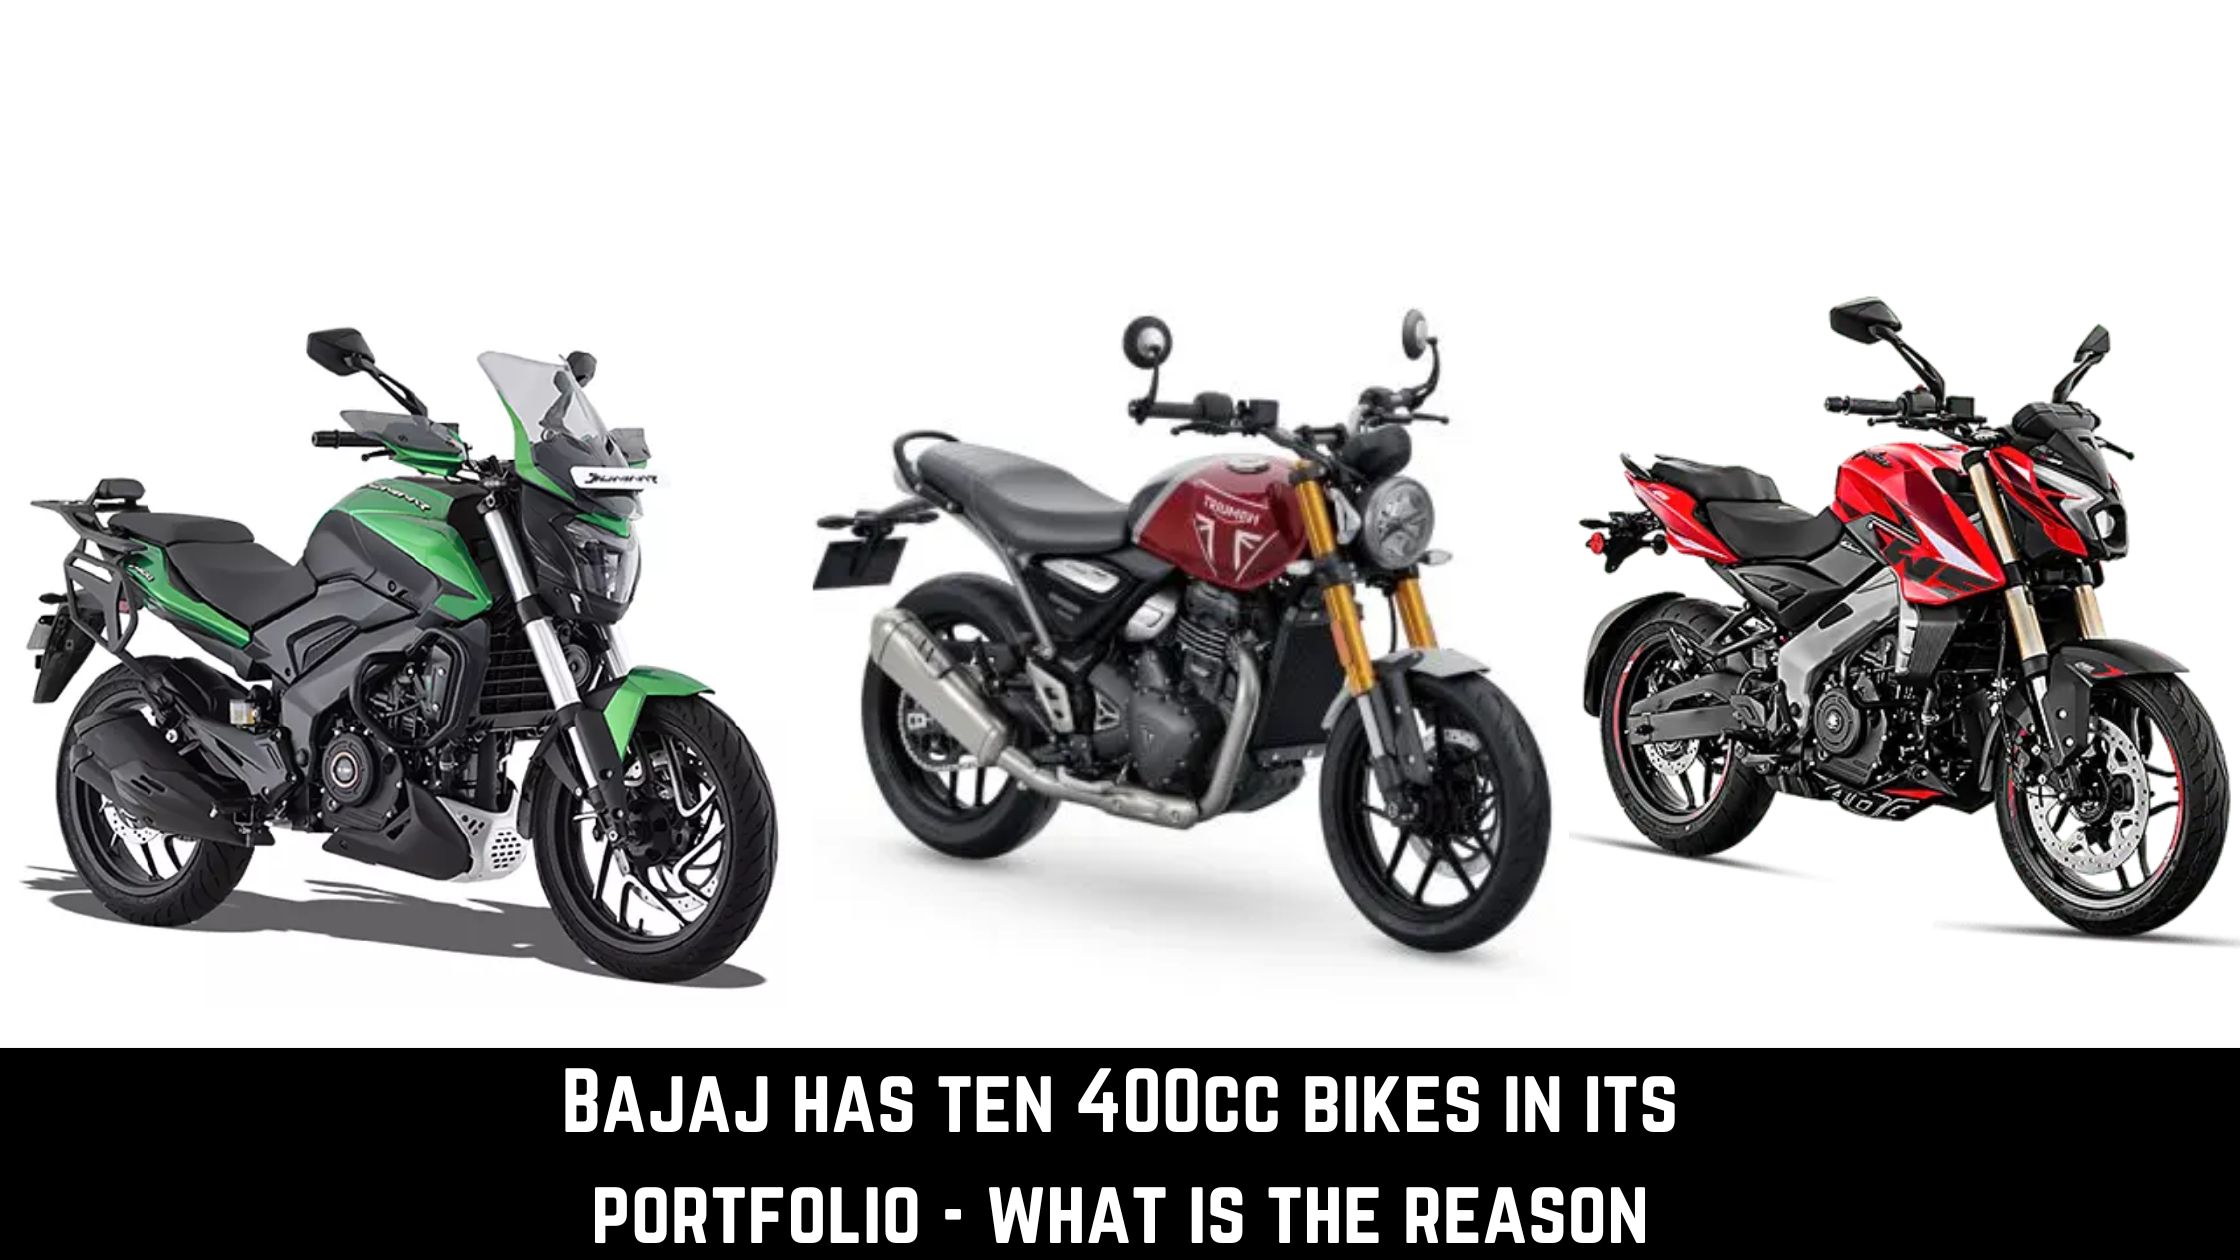 Bajaj has ten 400cc bikes in its portfolio